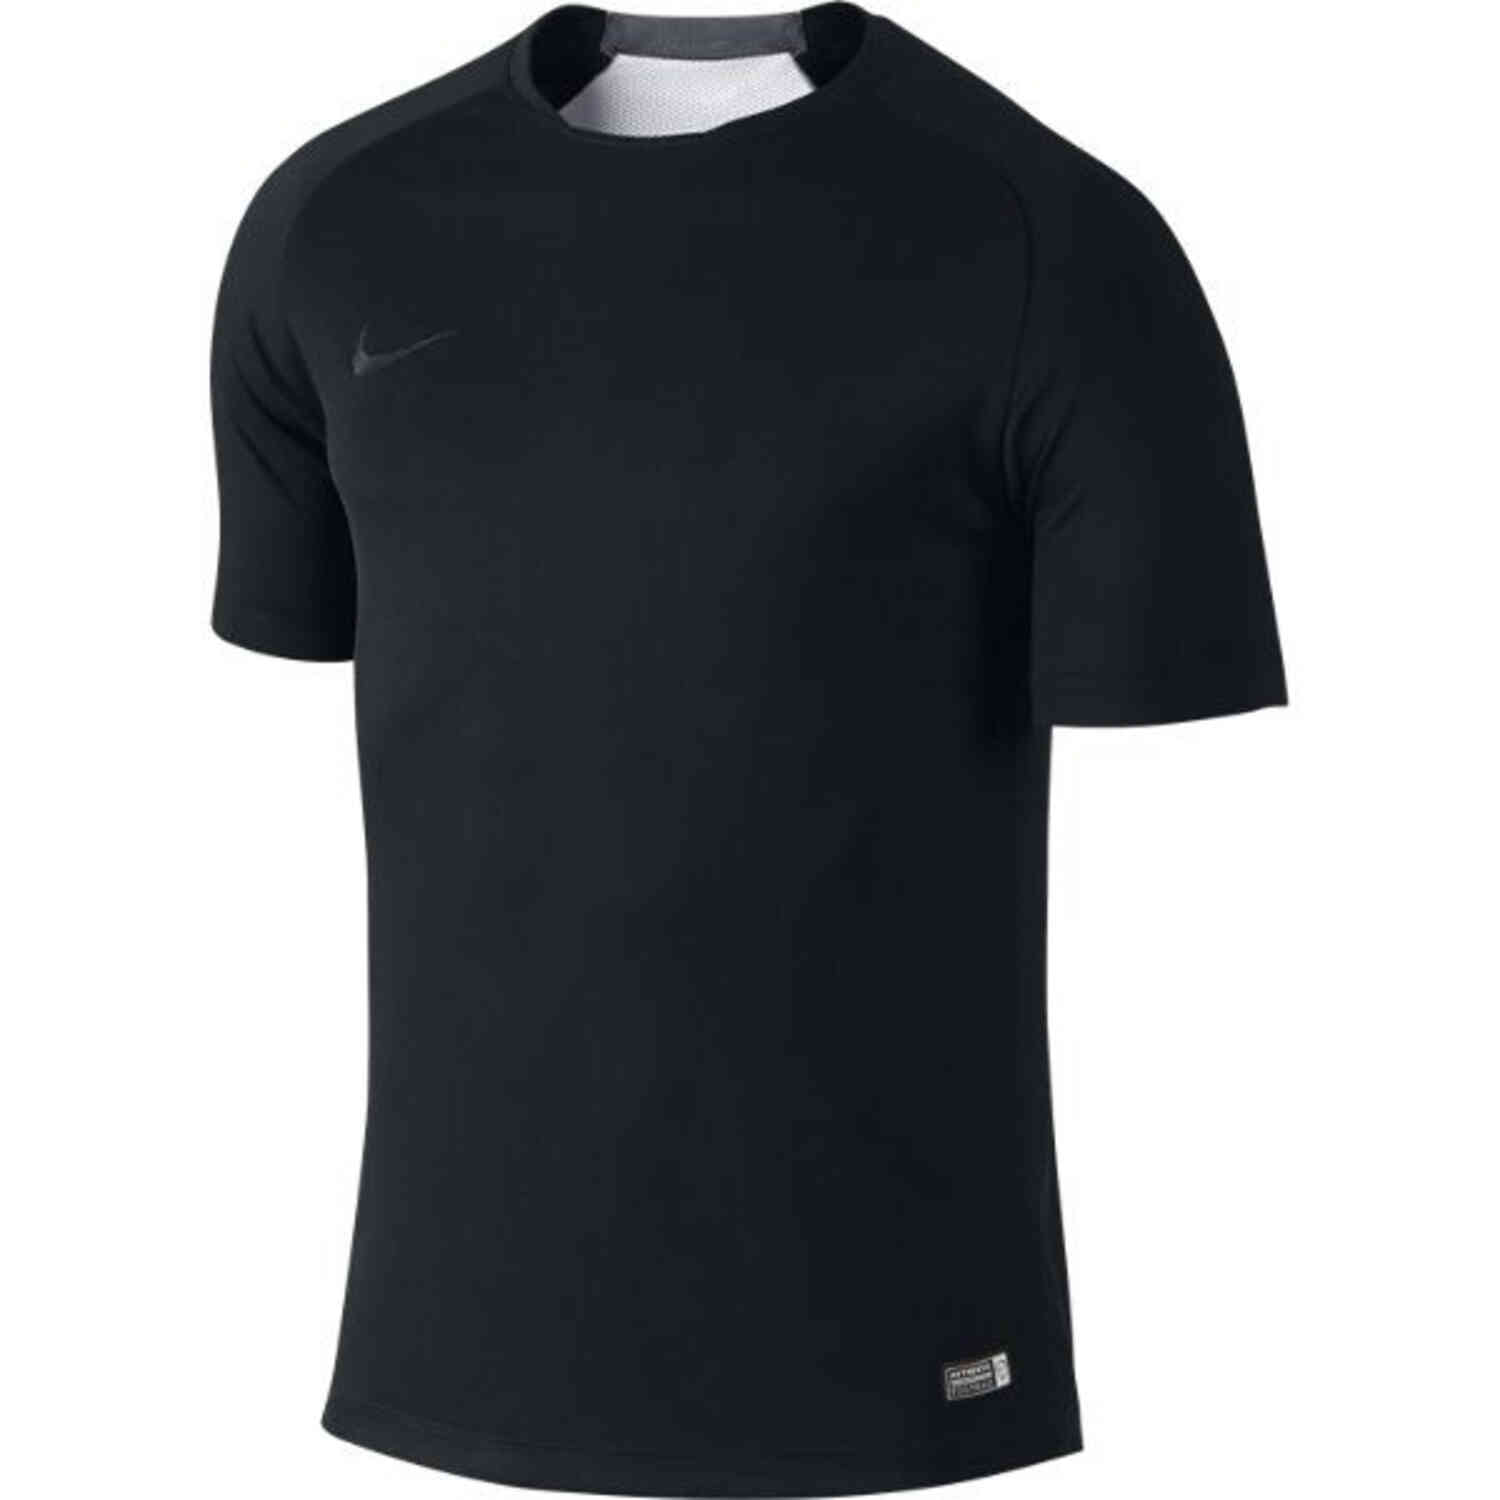 2 - Nike Soccer Training Jerseys